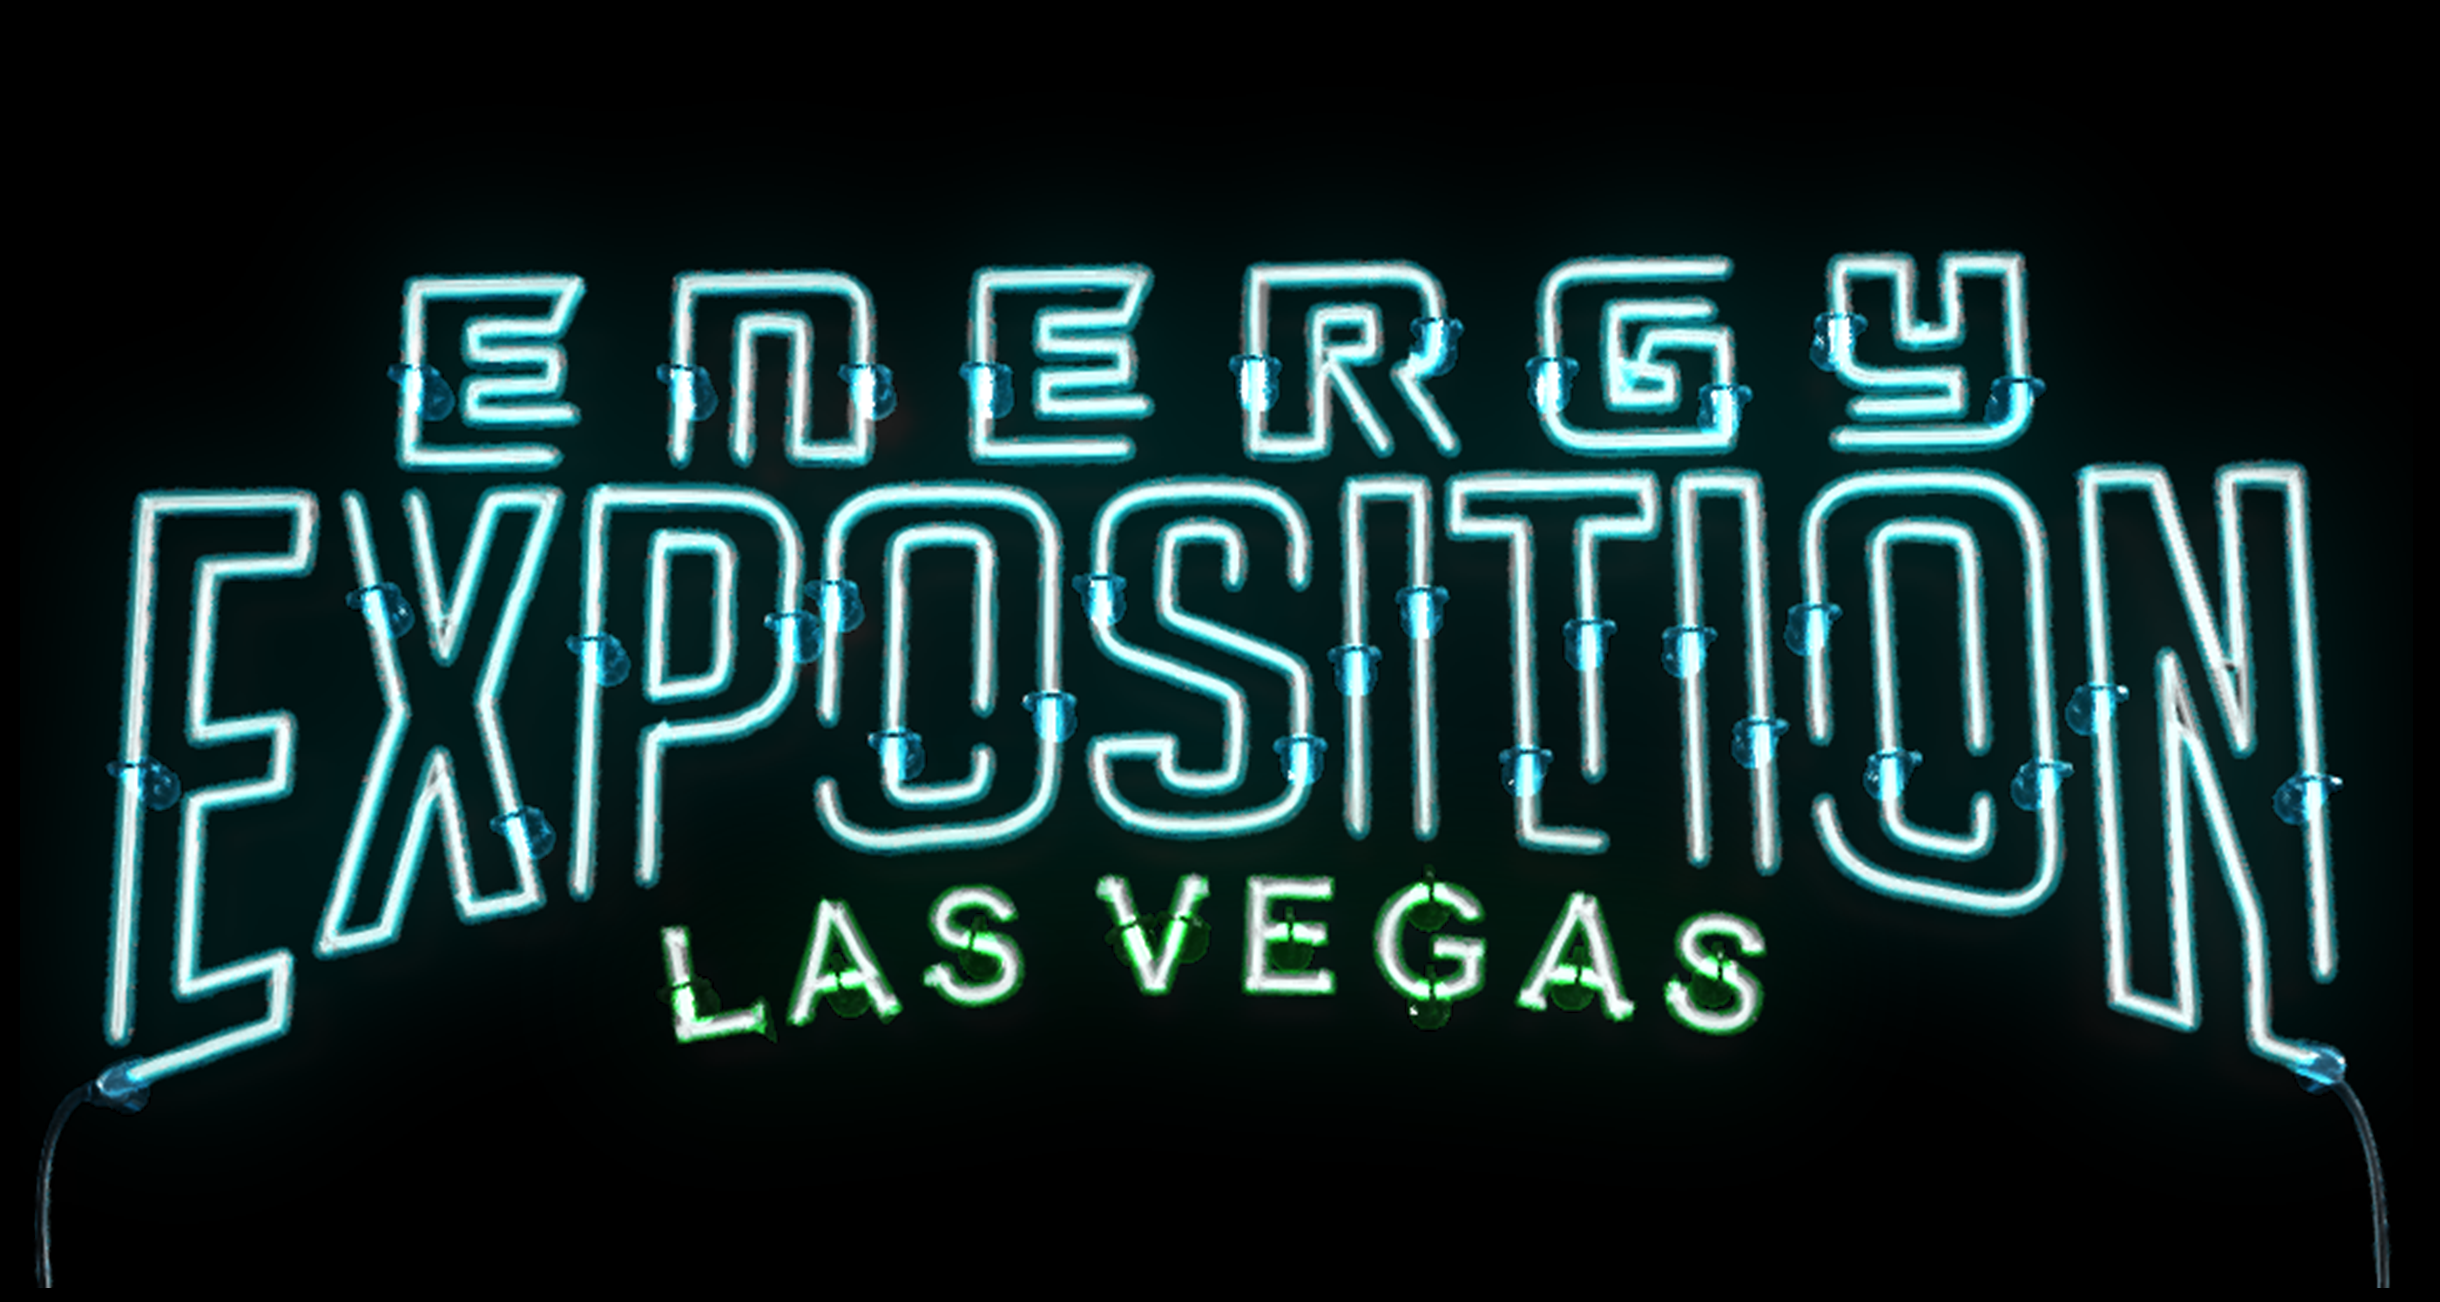 Energy Exposition